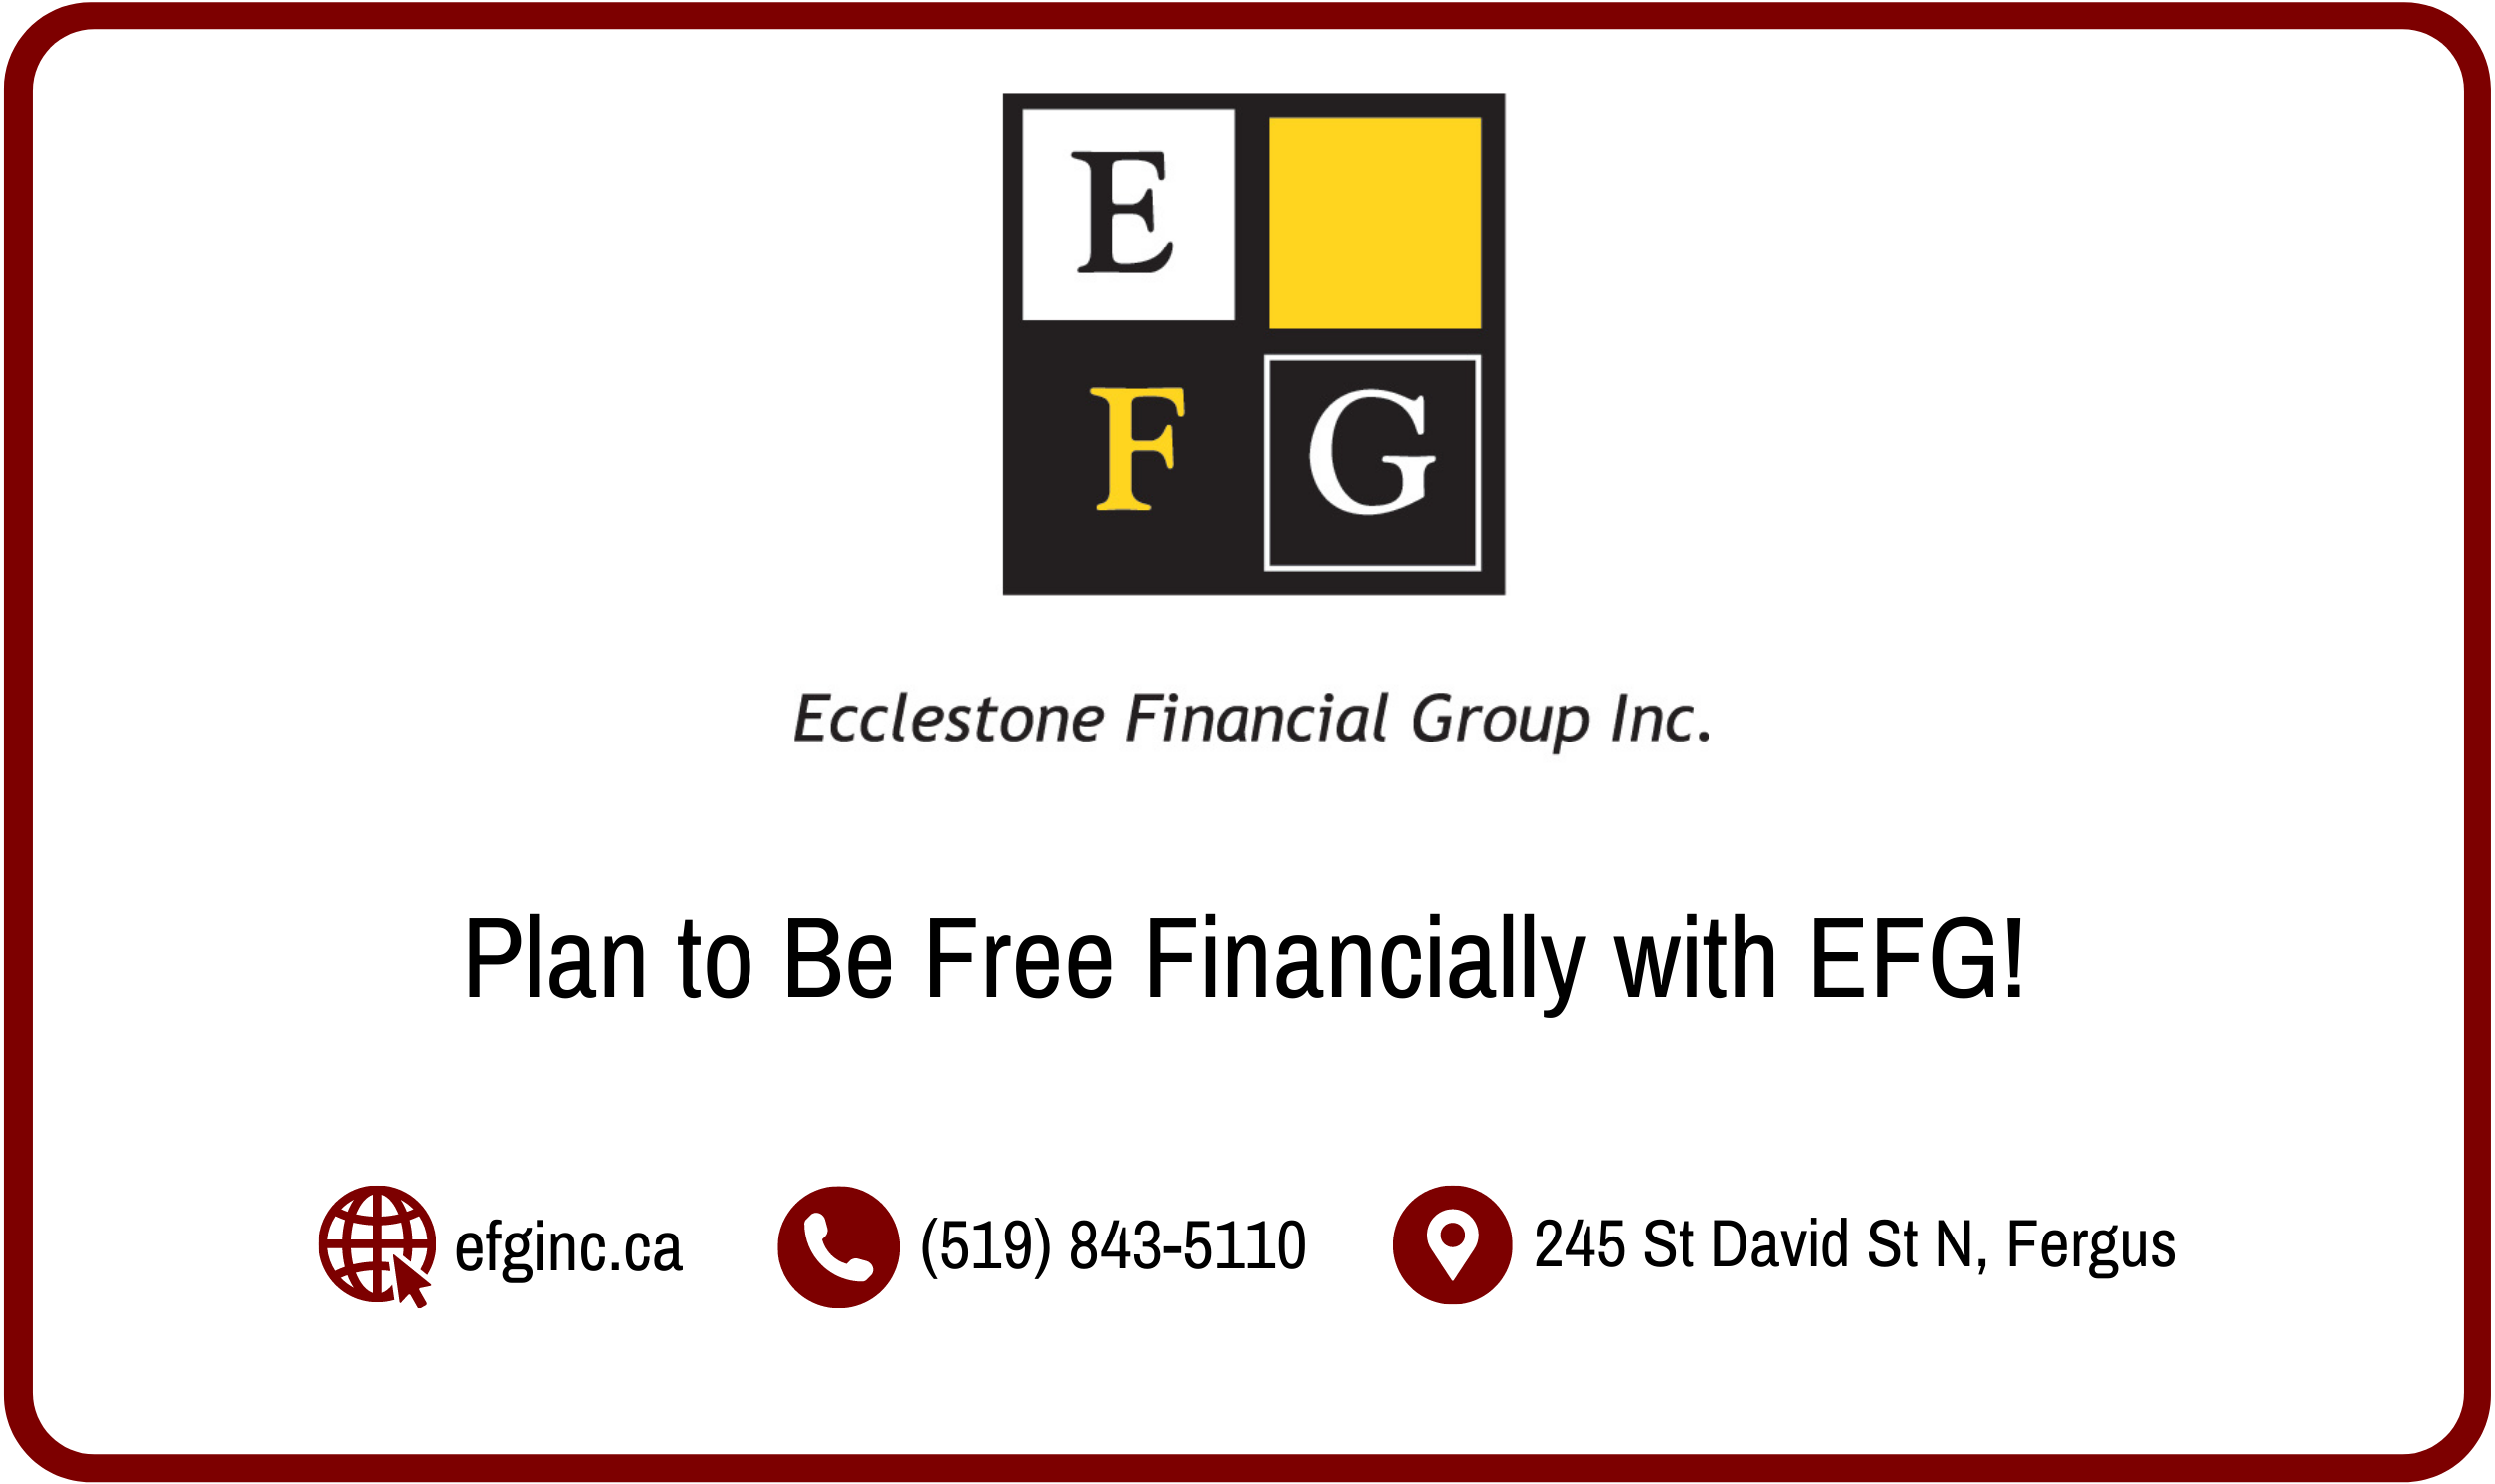 Ecclestone Financial Group